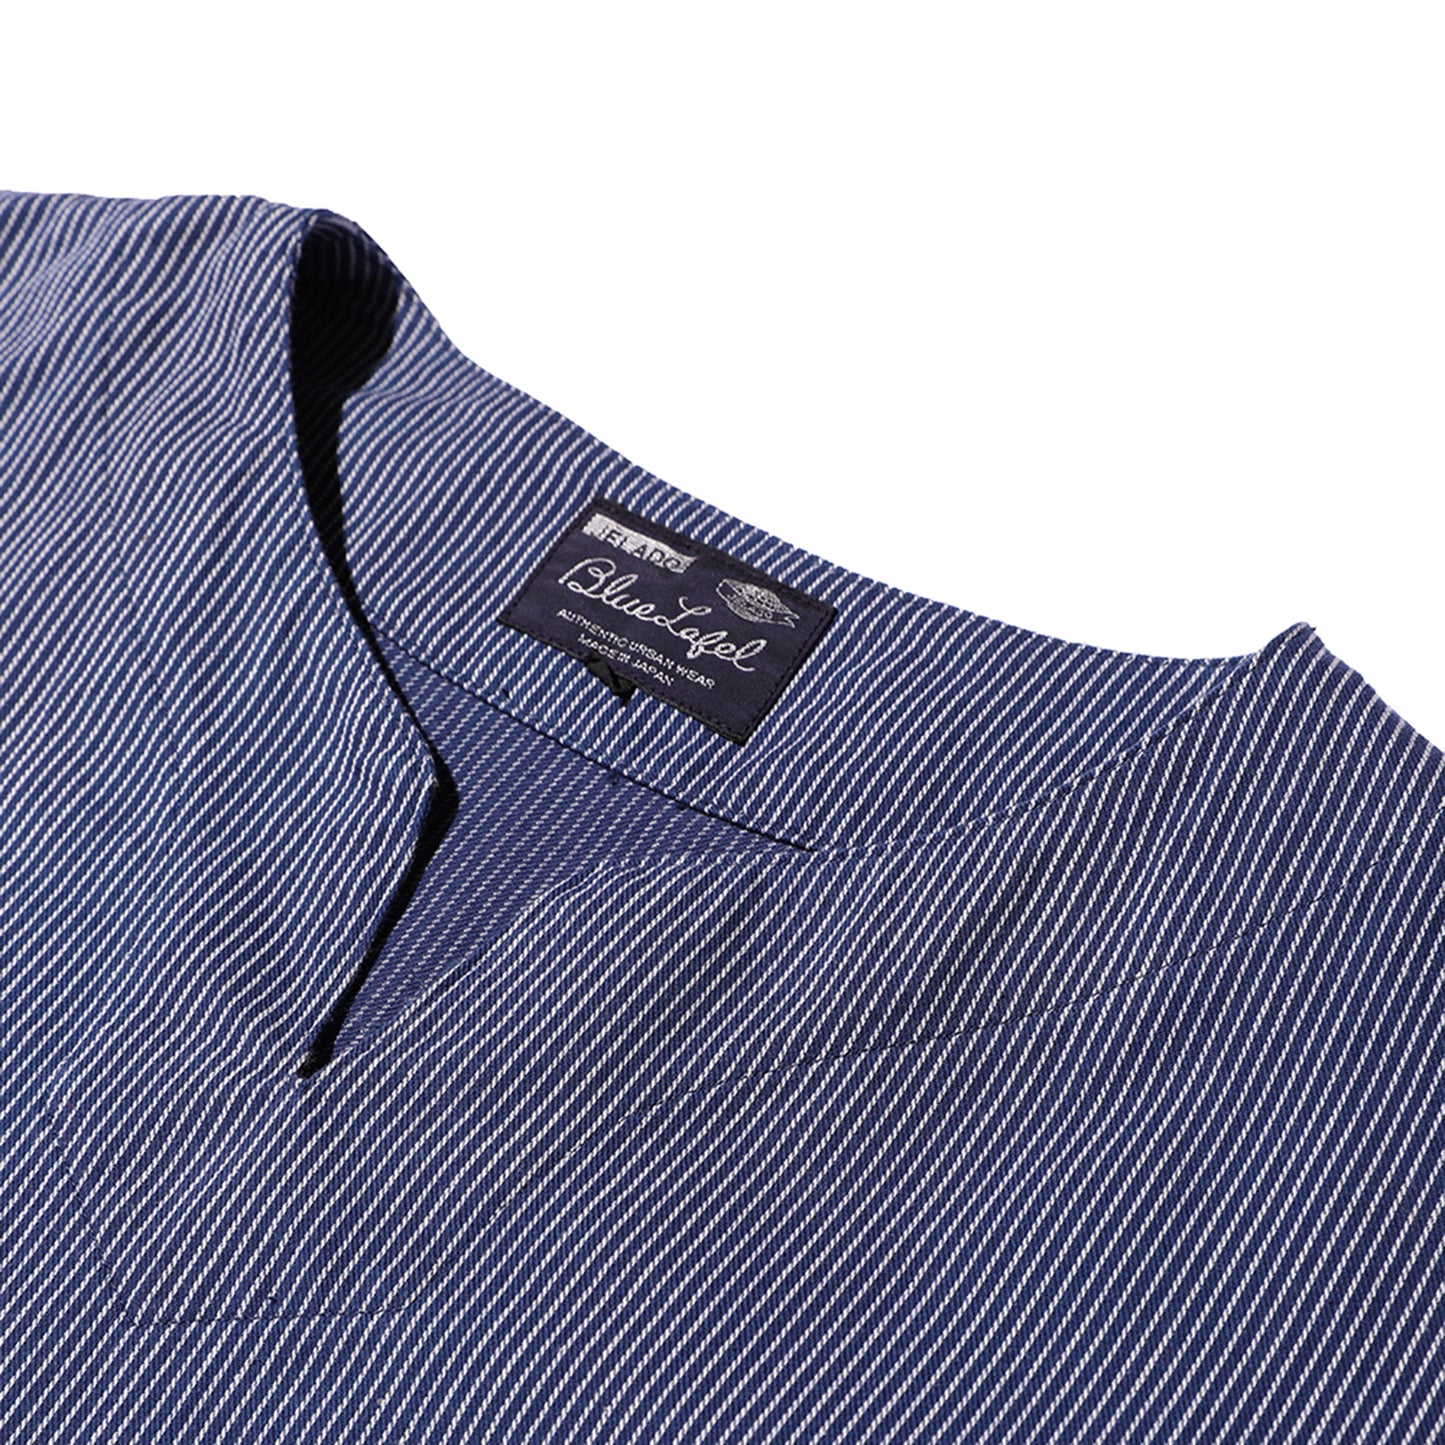 JELADO Sleeping shirt(スリーピングシャツ)【BL71108】